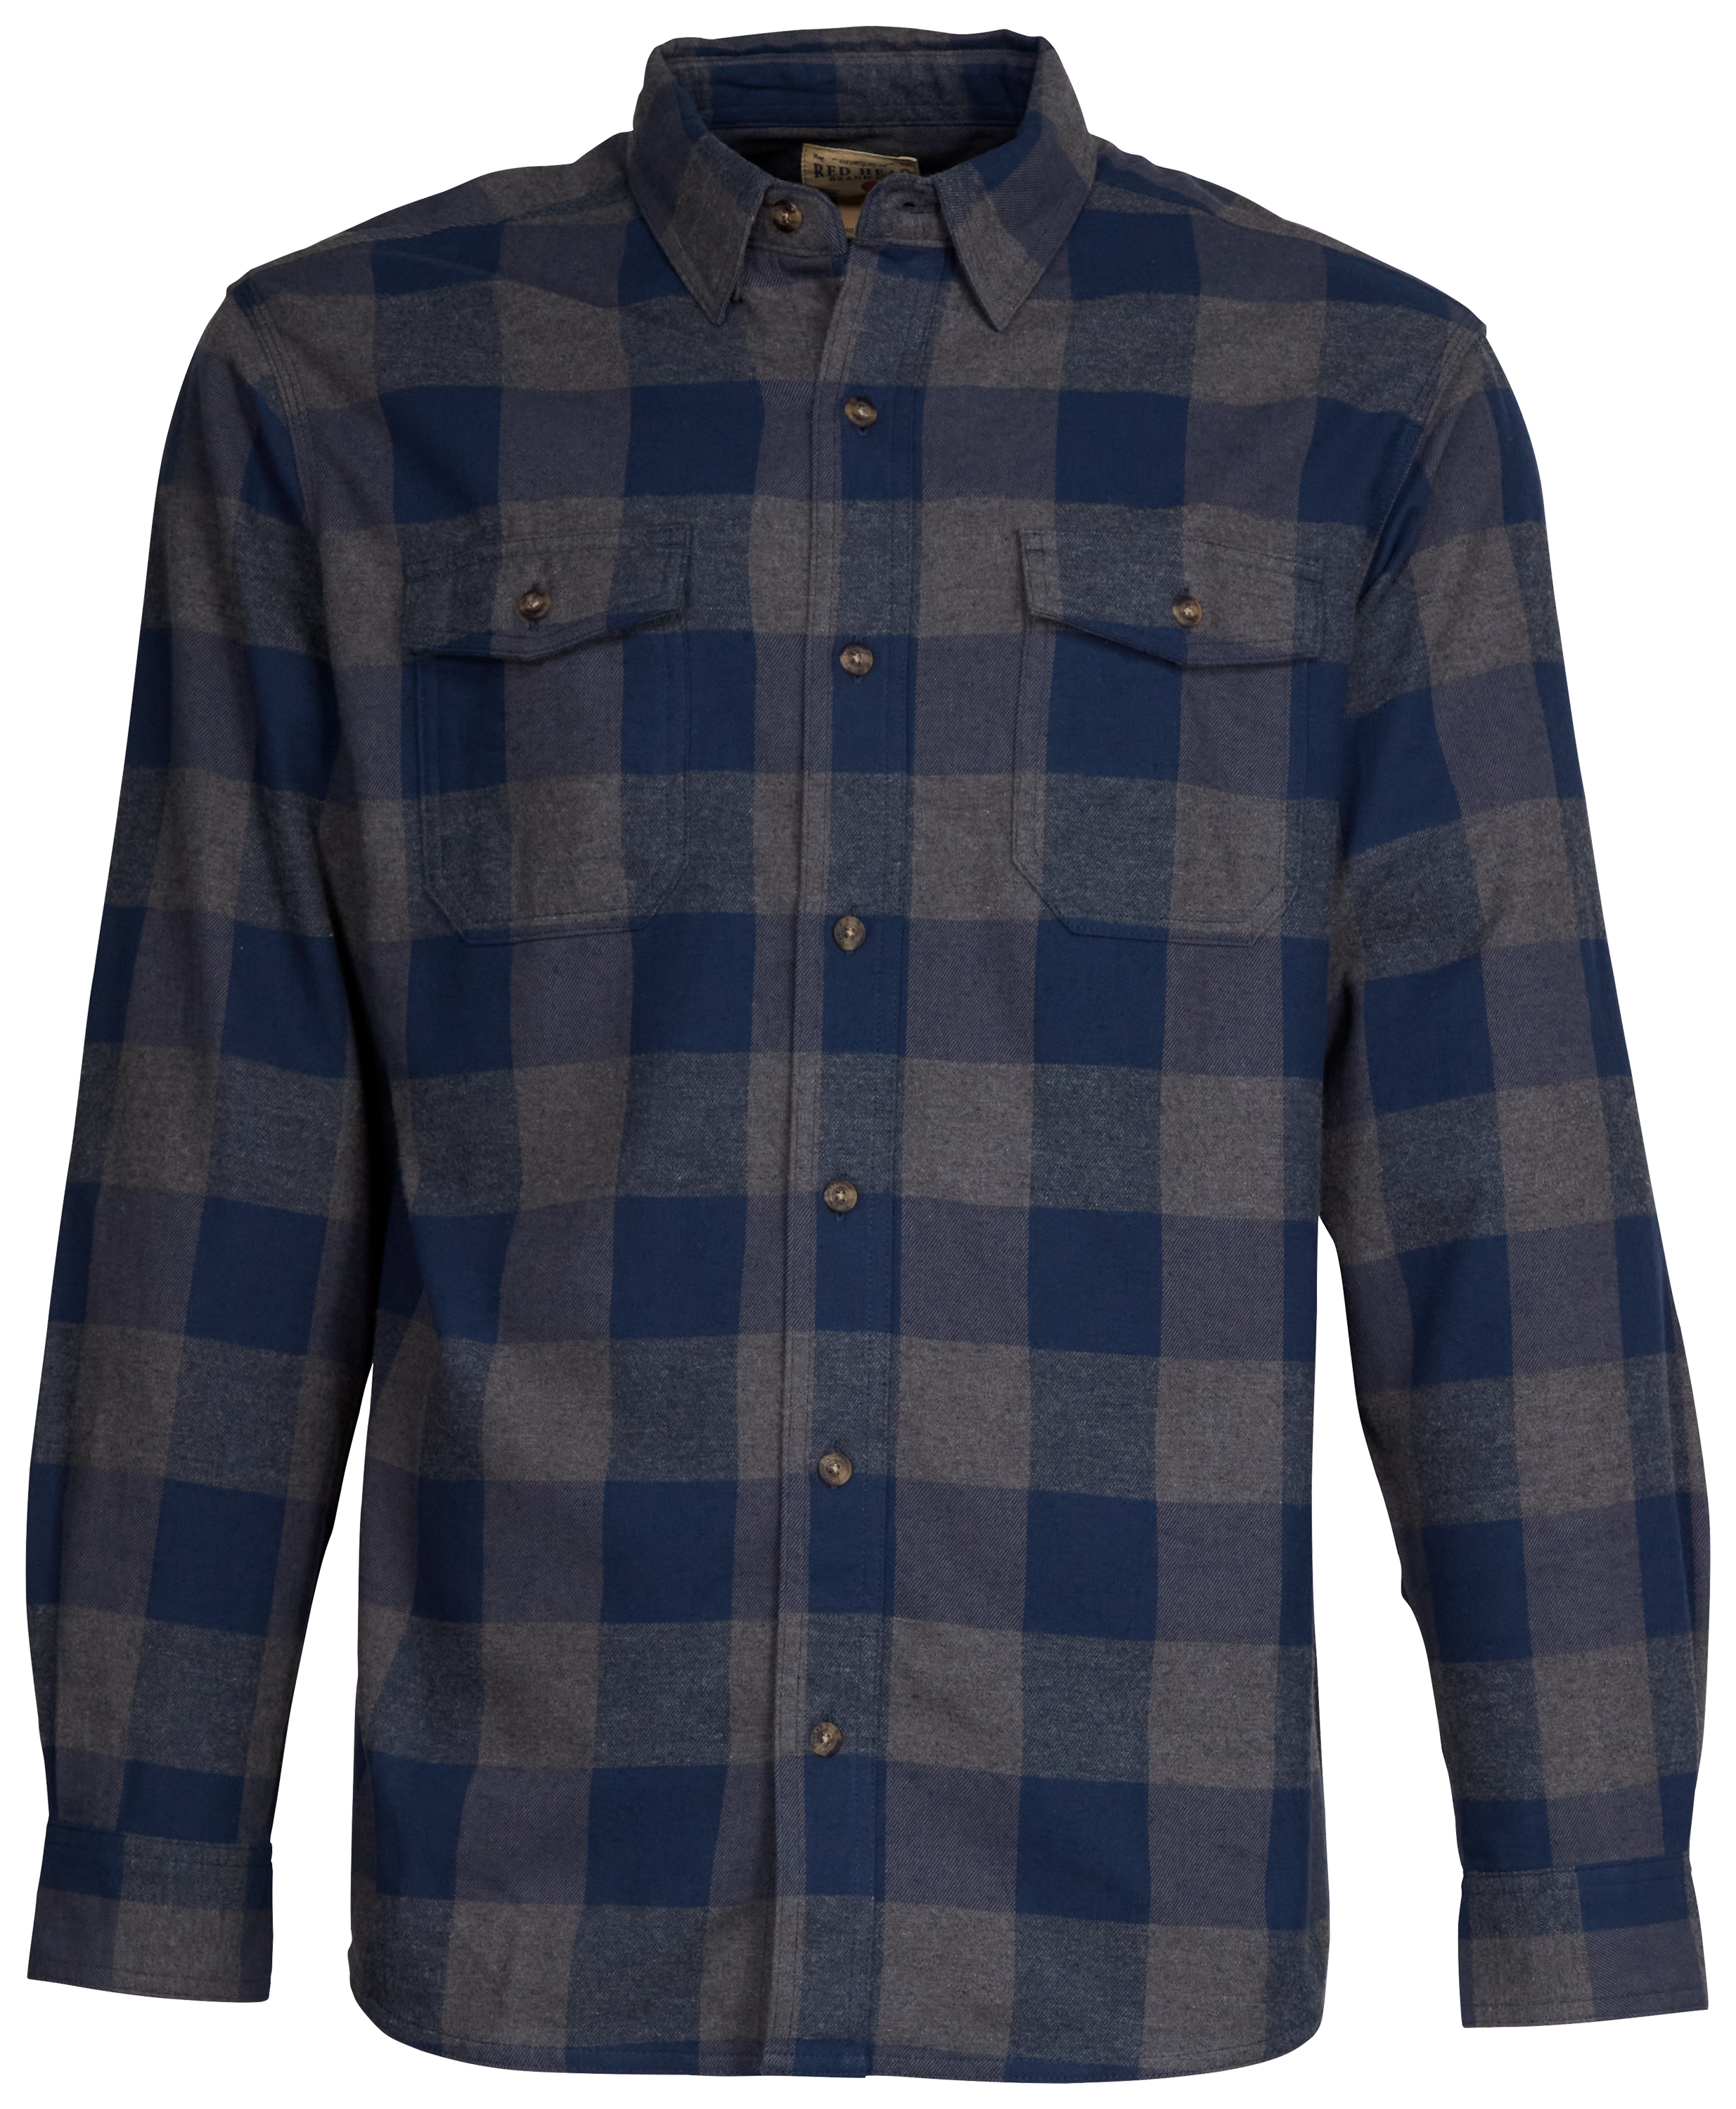 RedHead Buffalo Creek Flannel Long-Sleeve Shirt for Men - Navy/Gray - S